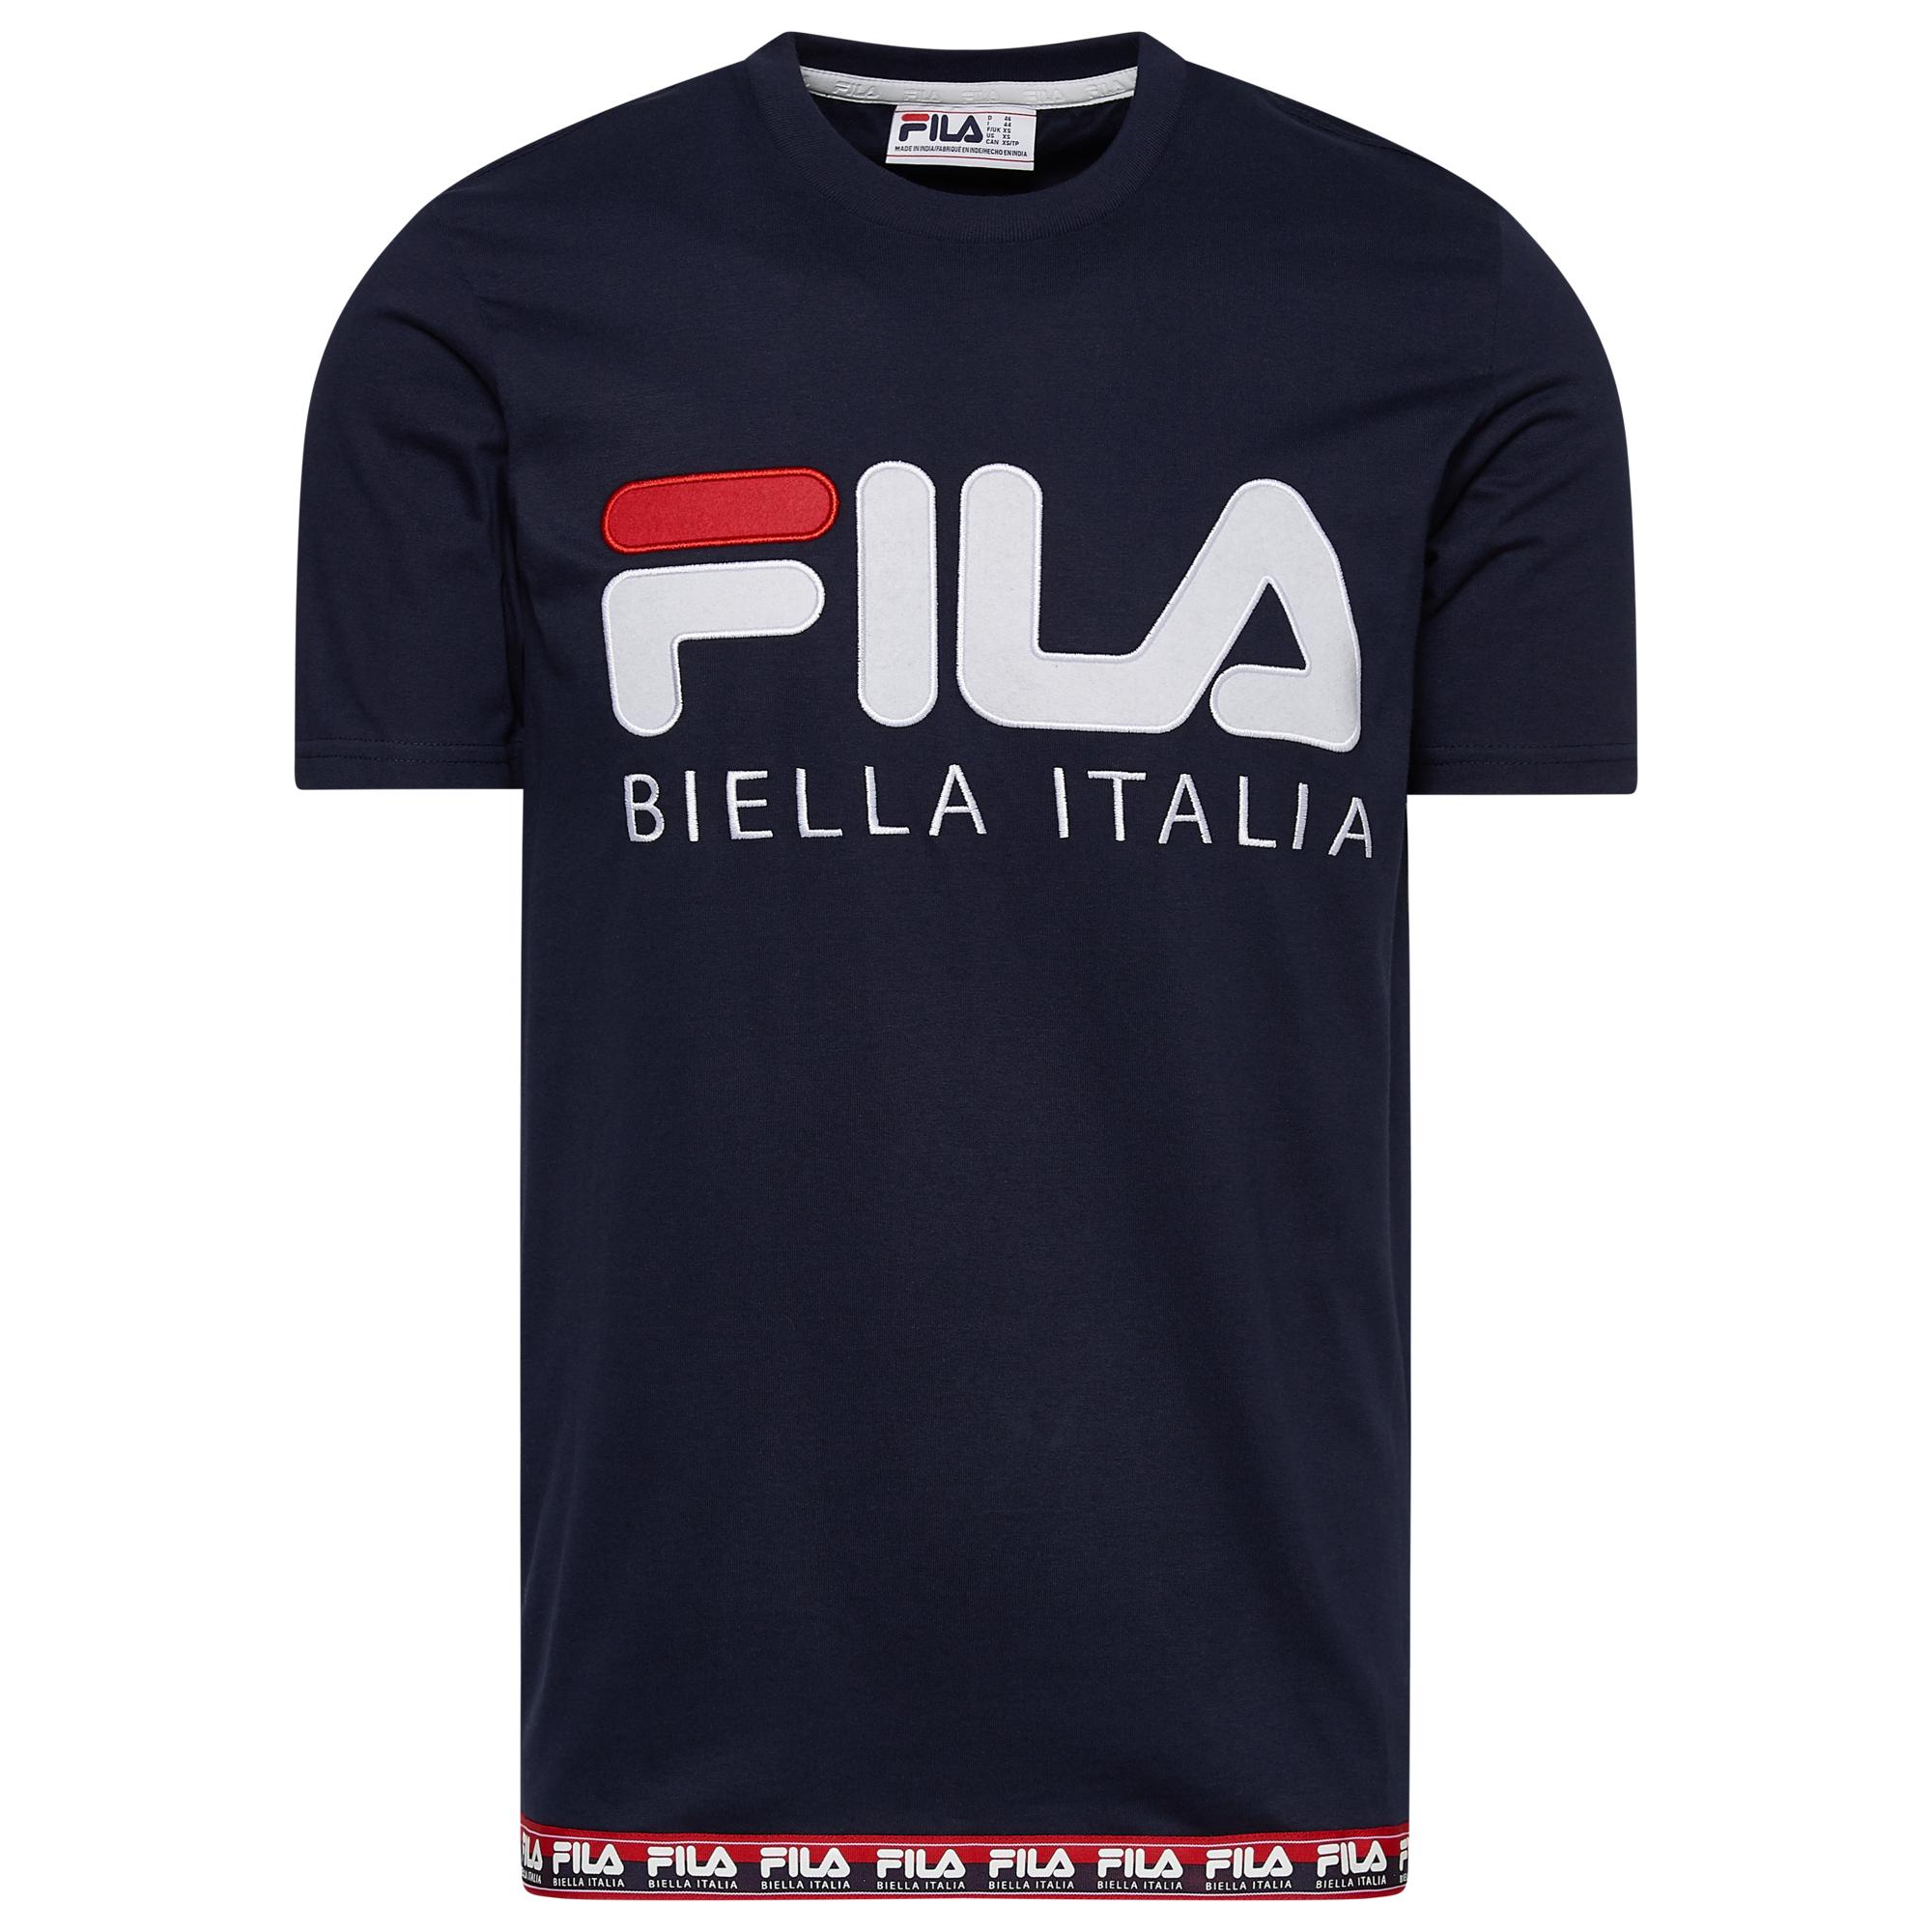 Fila Biella Italia T-shirt in Blue for Men - Lyst